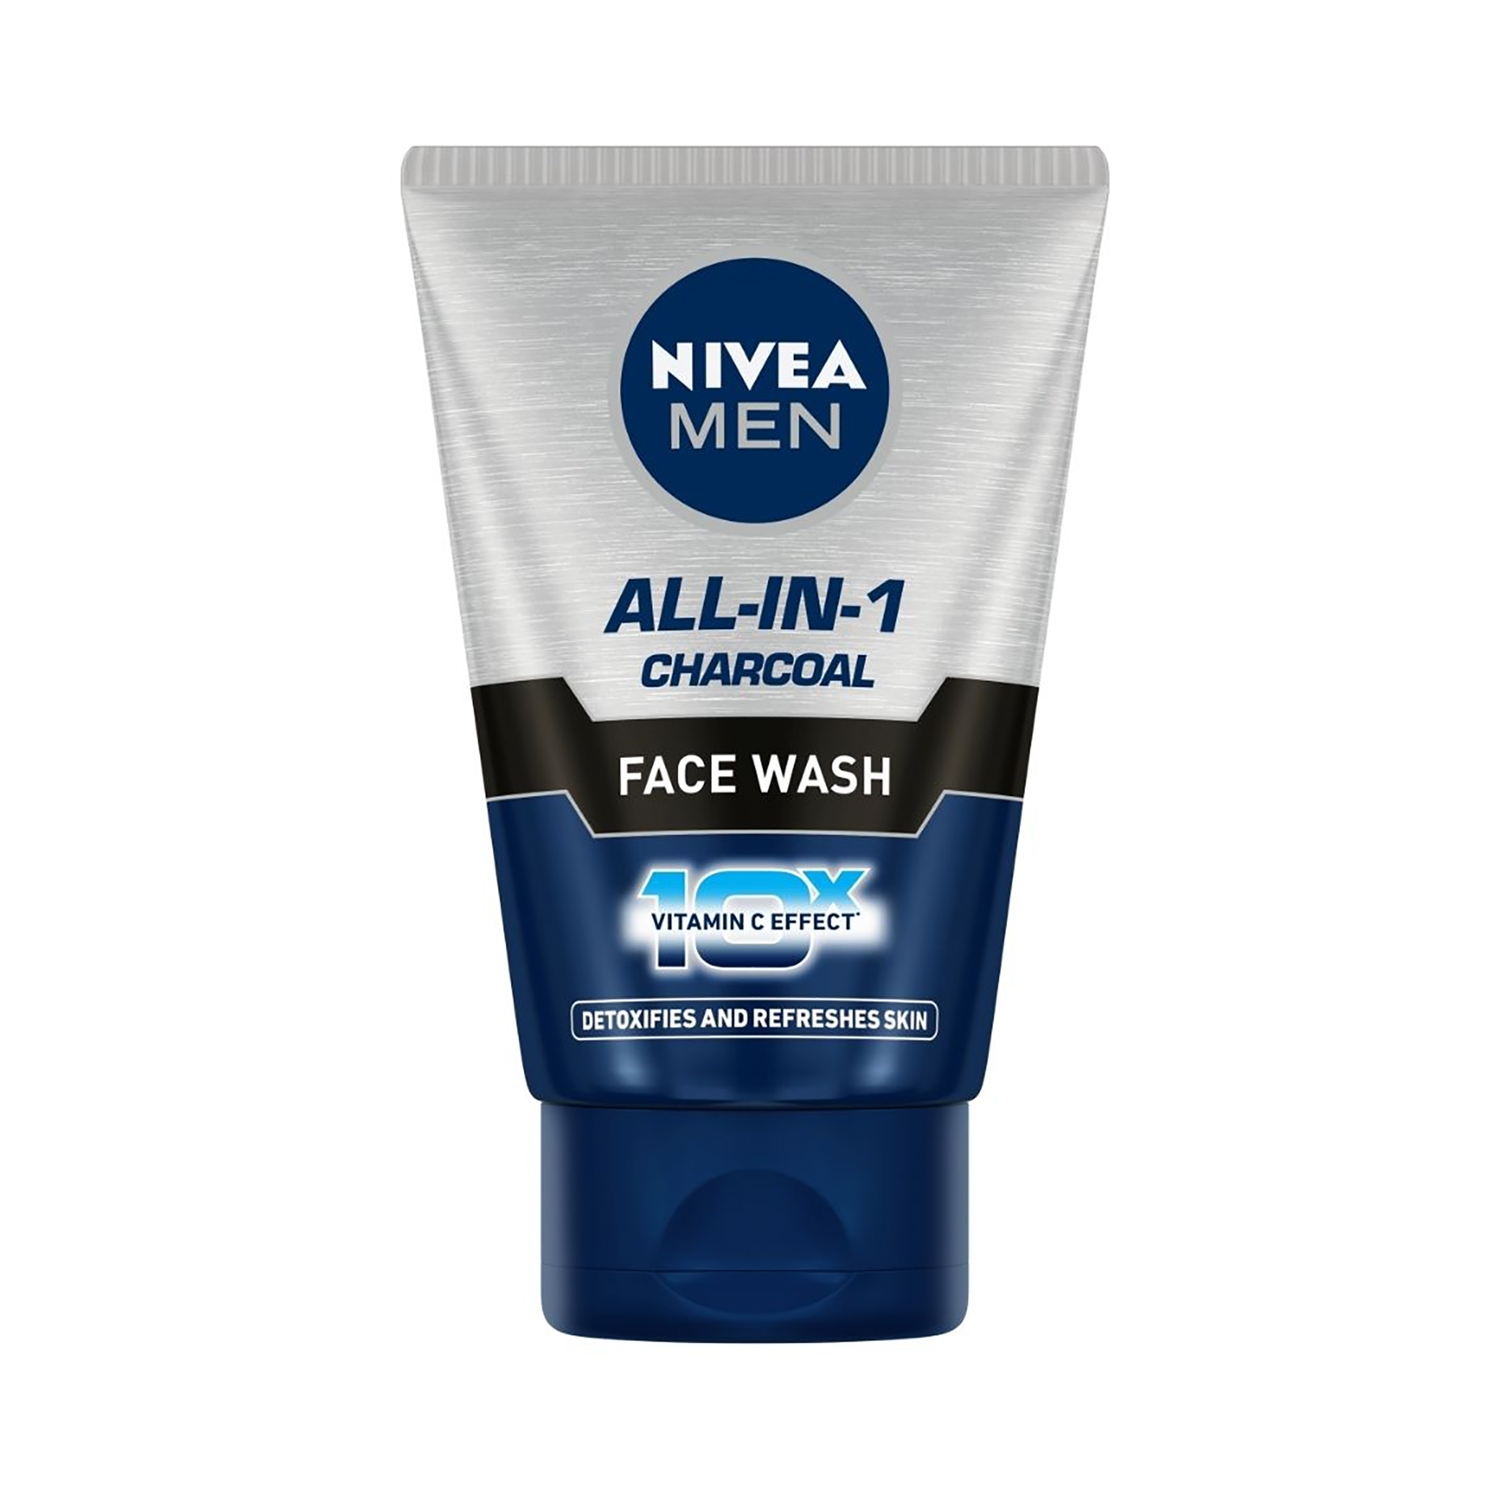 Nivea | Nivea Men All-In-1 10X Vita C Charcoal Face Wash (50g)